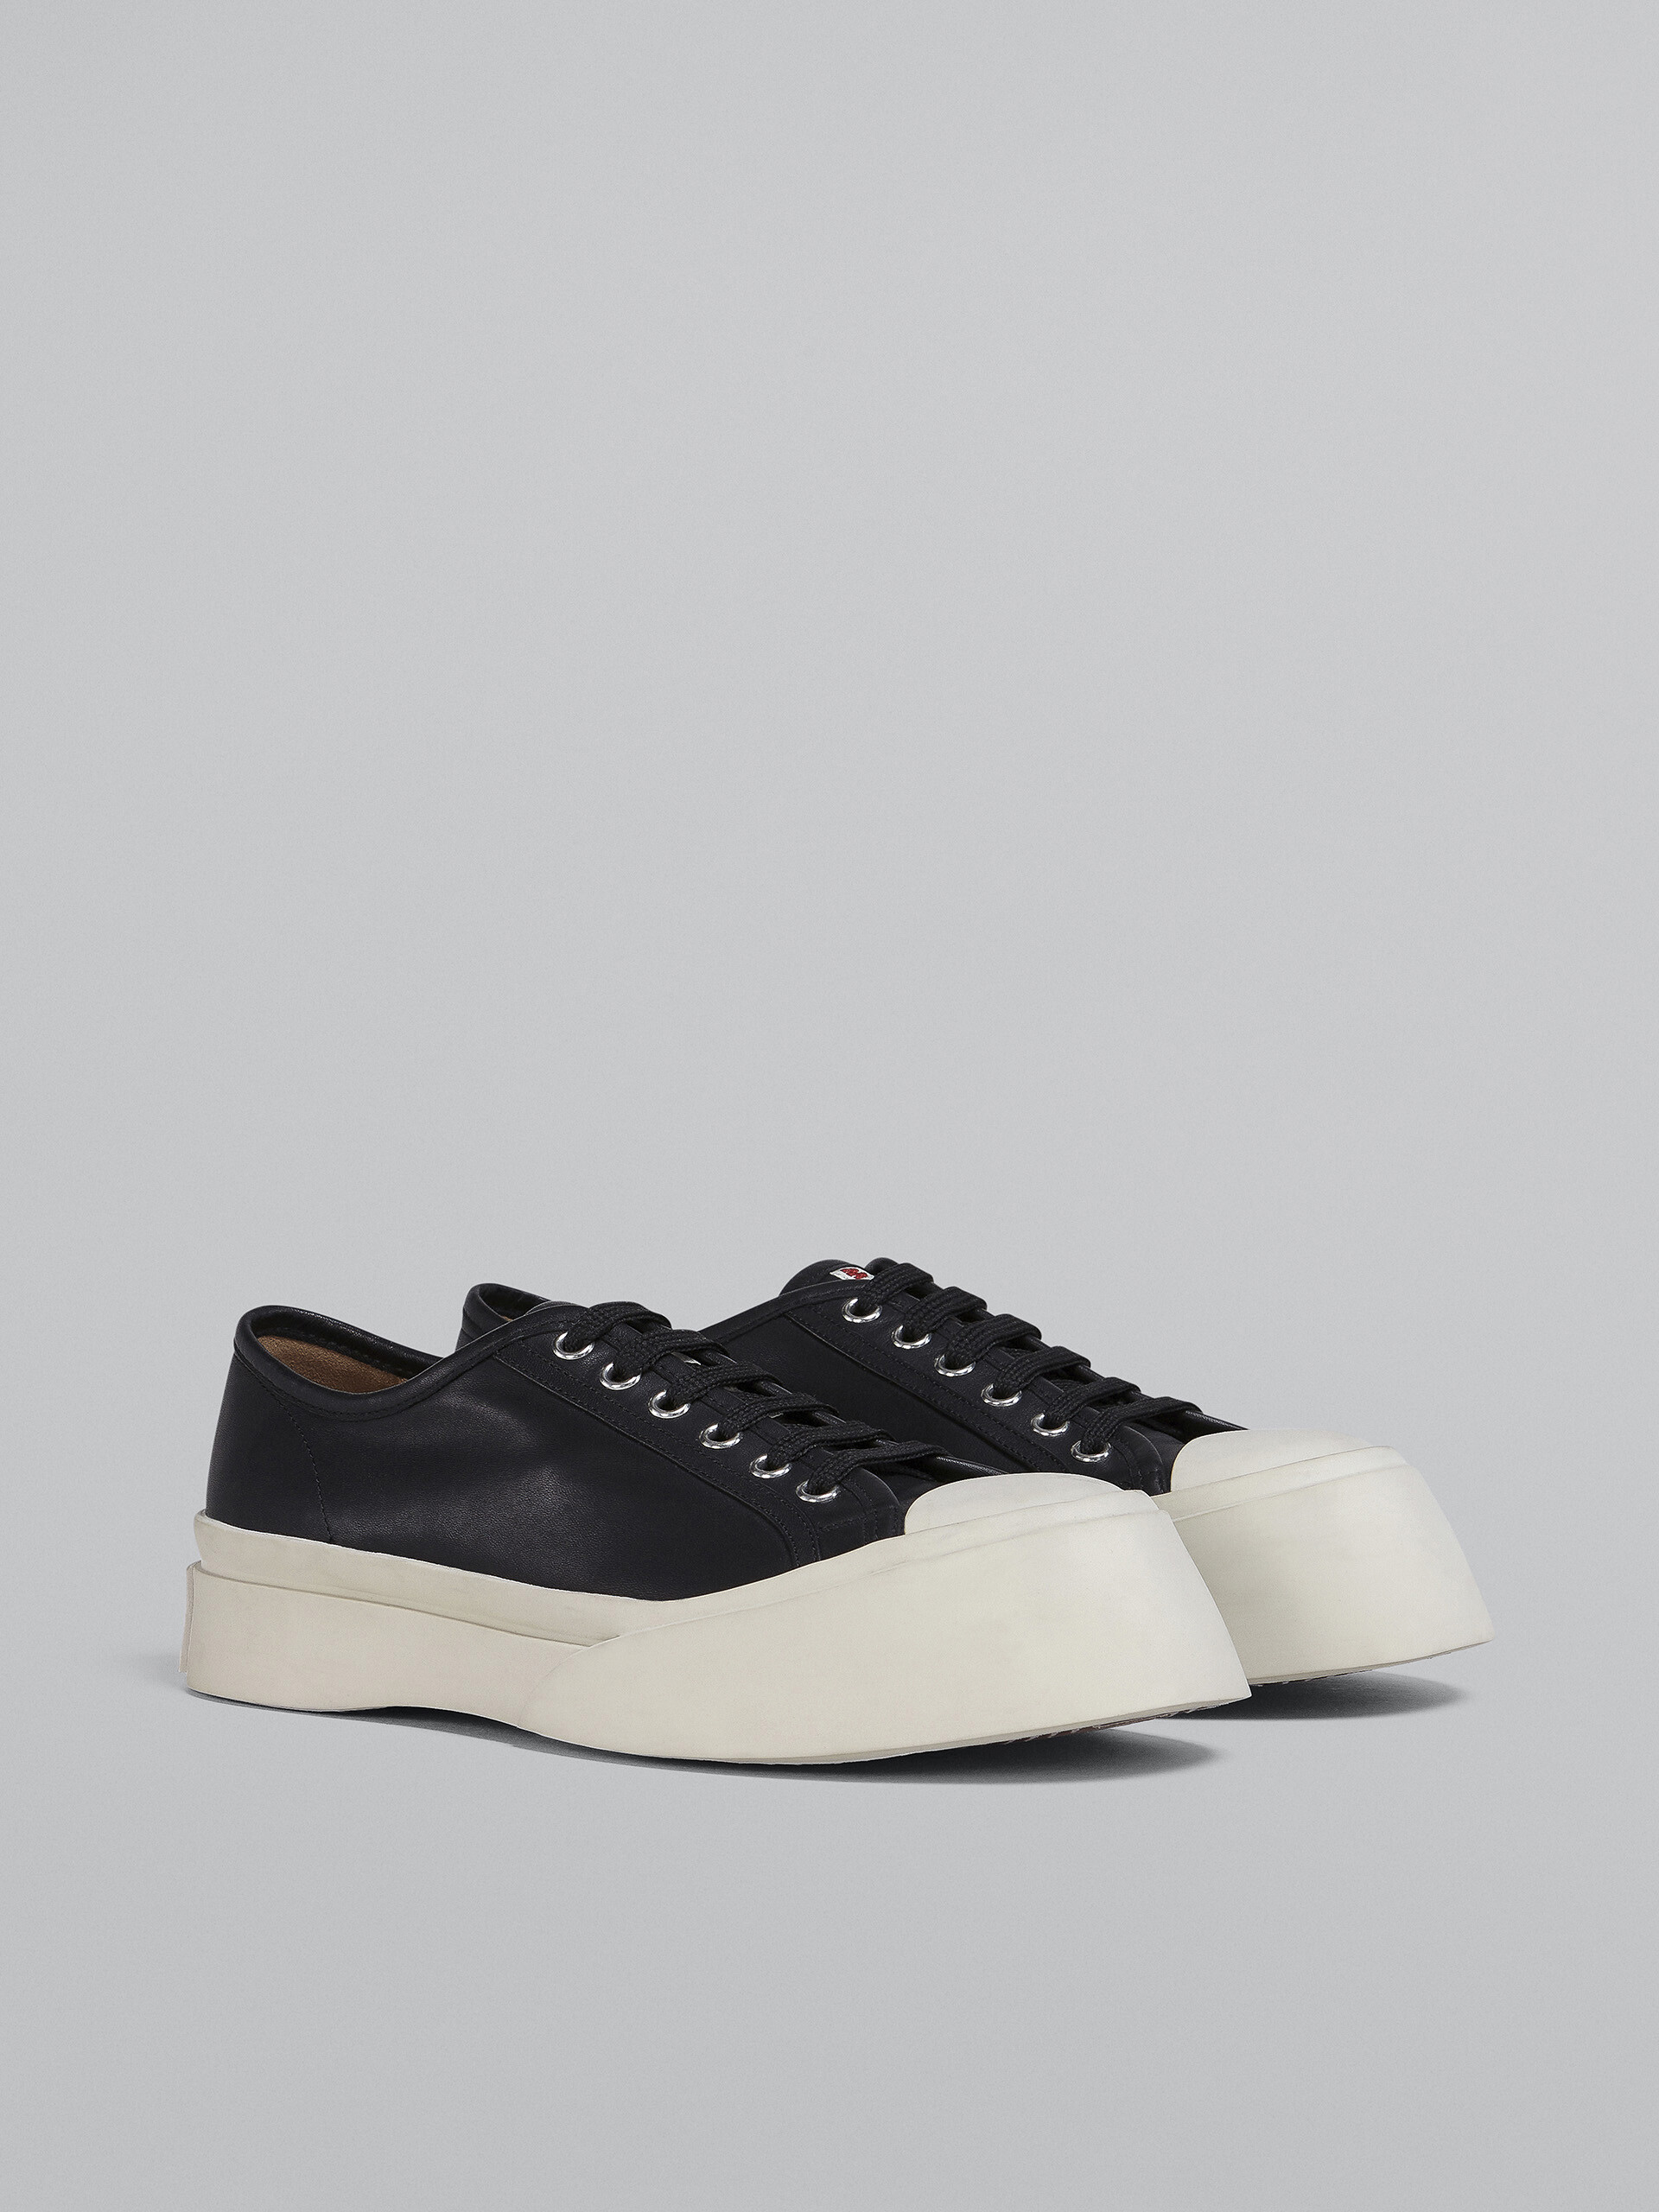 Black nappa leather Pablo sneaker - Sneakers - Image 2